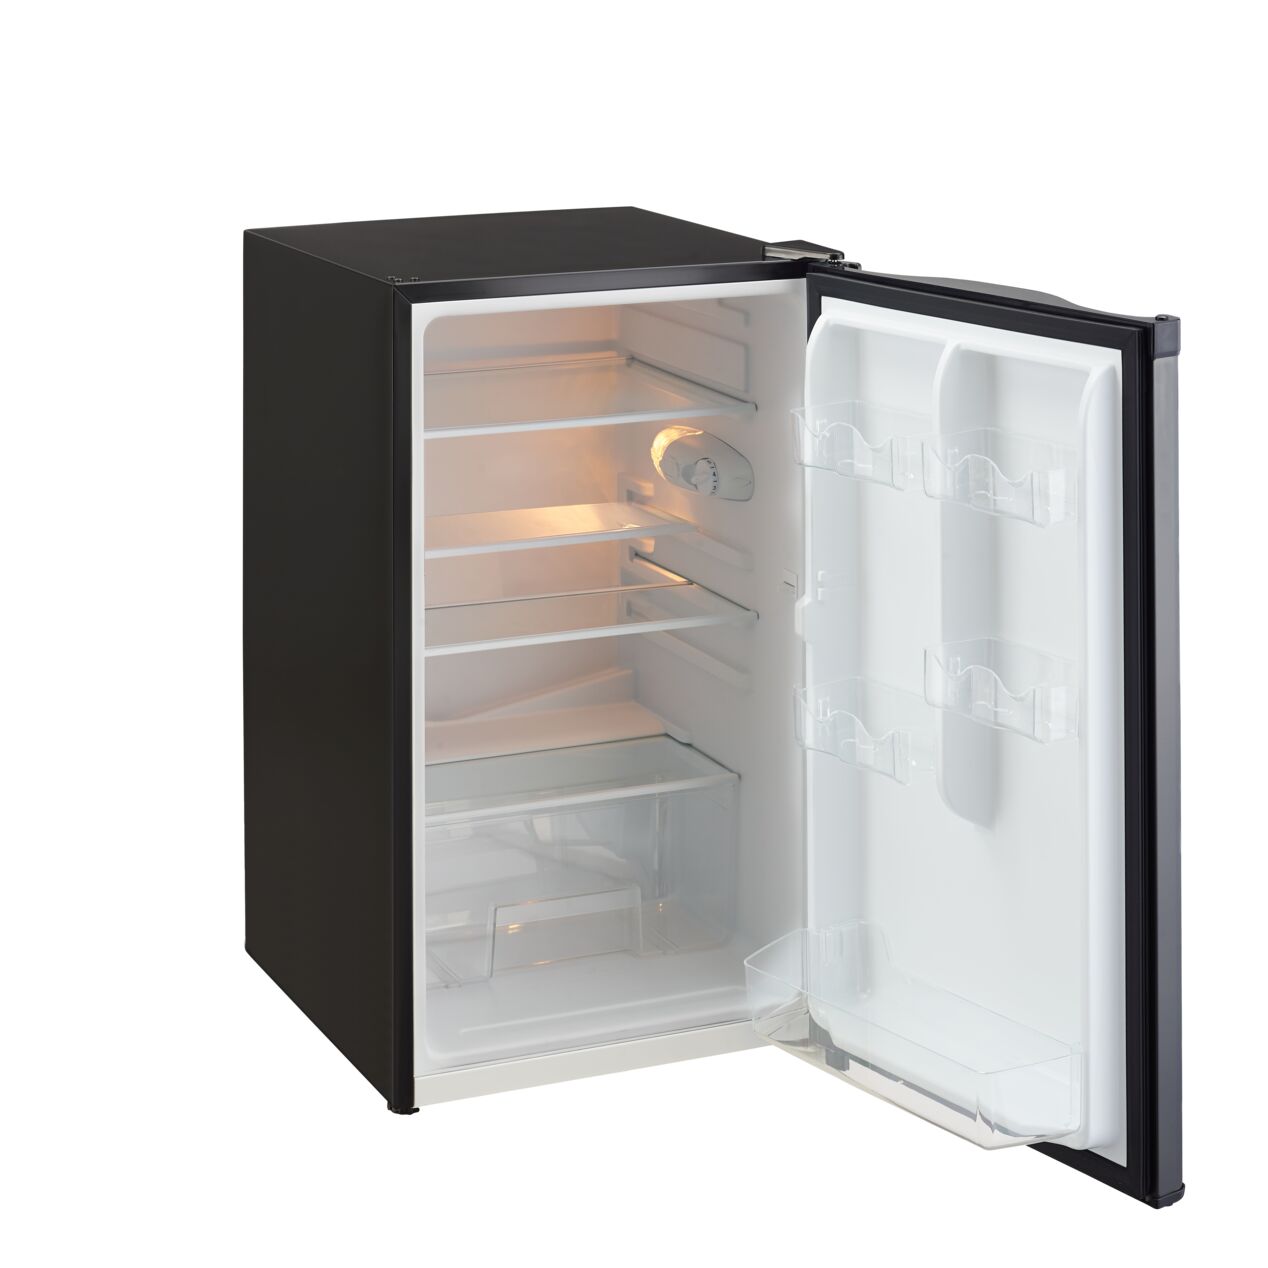 Marathon Black Stainless Compact Refrigerator (4.5 cu.ft.) - MAR45BLS-1